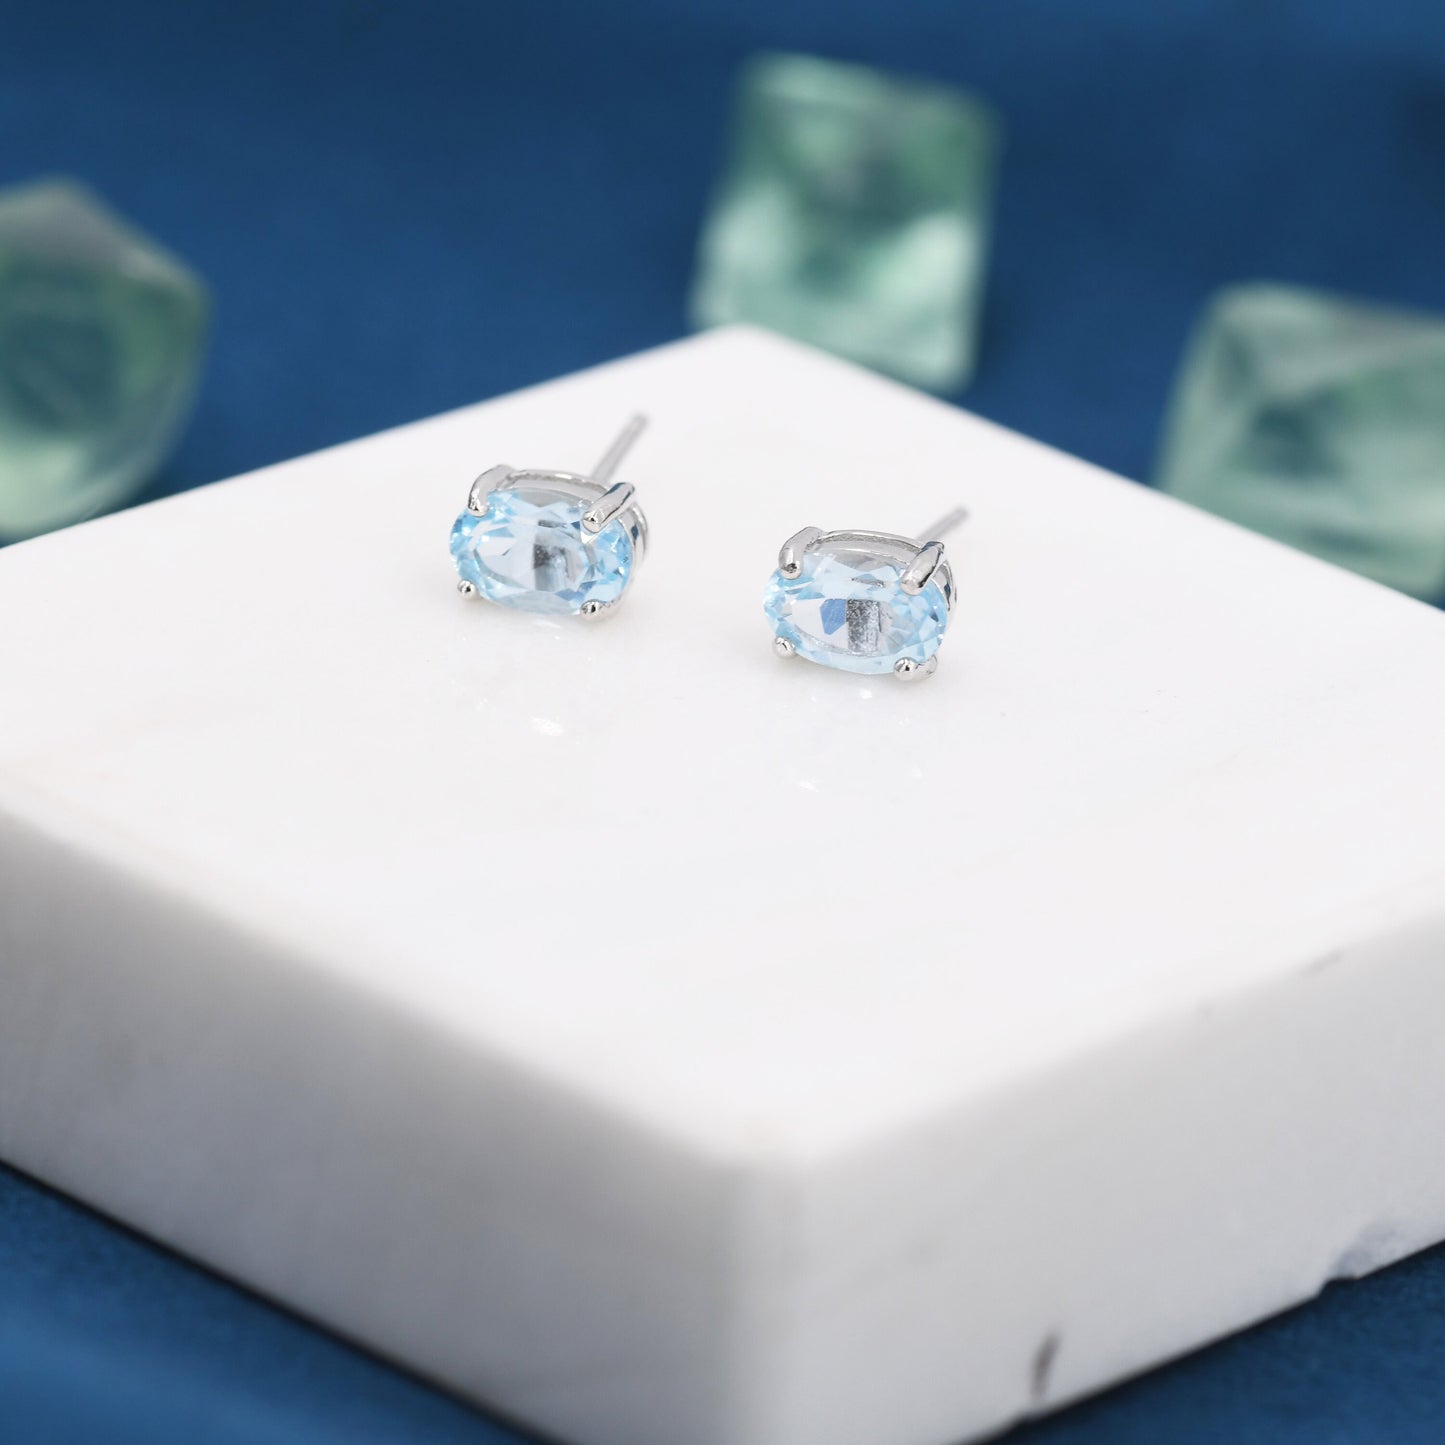 Genuine Topaz Crystal Stud Earrings in Sterling Silver, Natural Topaz Oval Crystal Earrings, March Birthstone